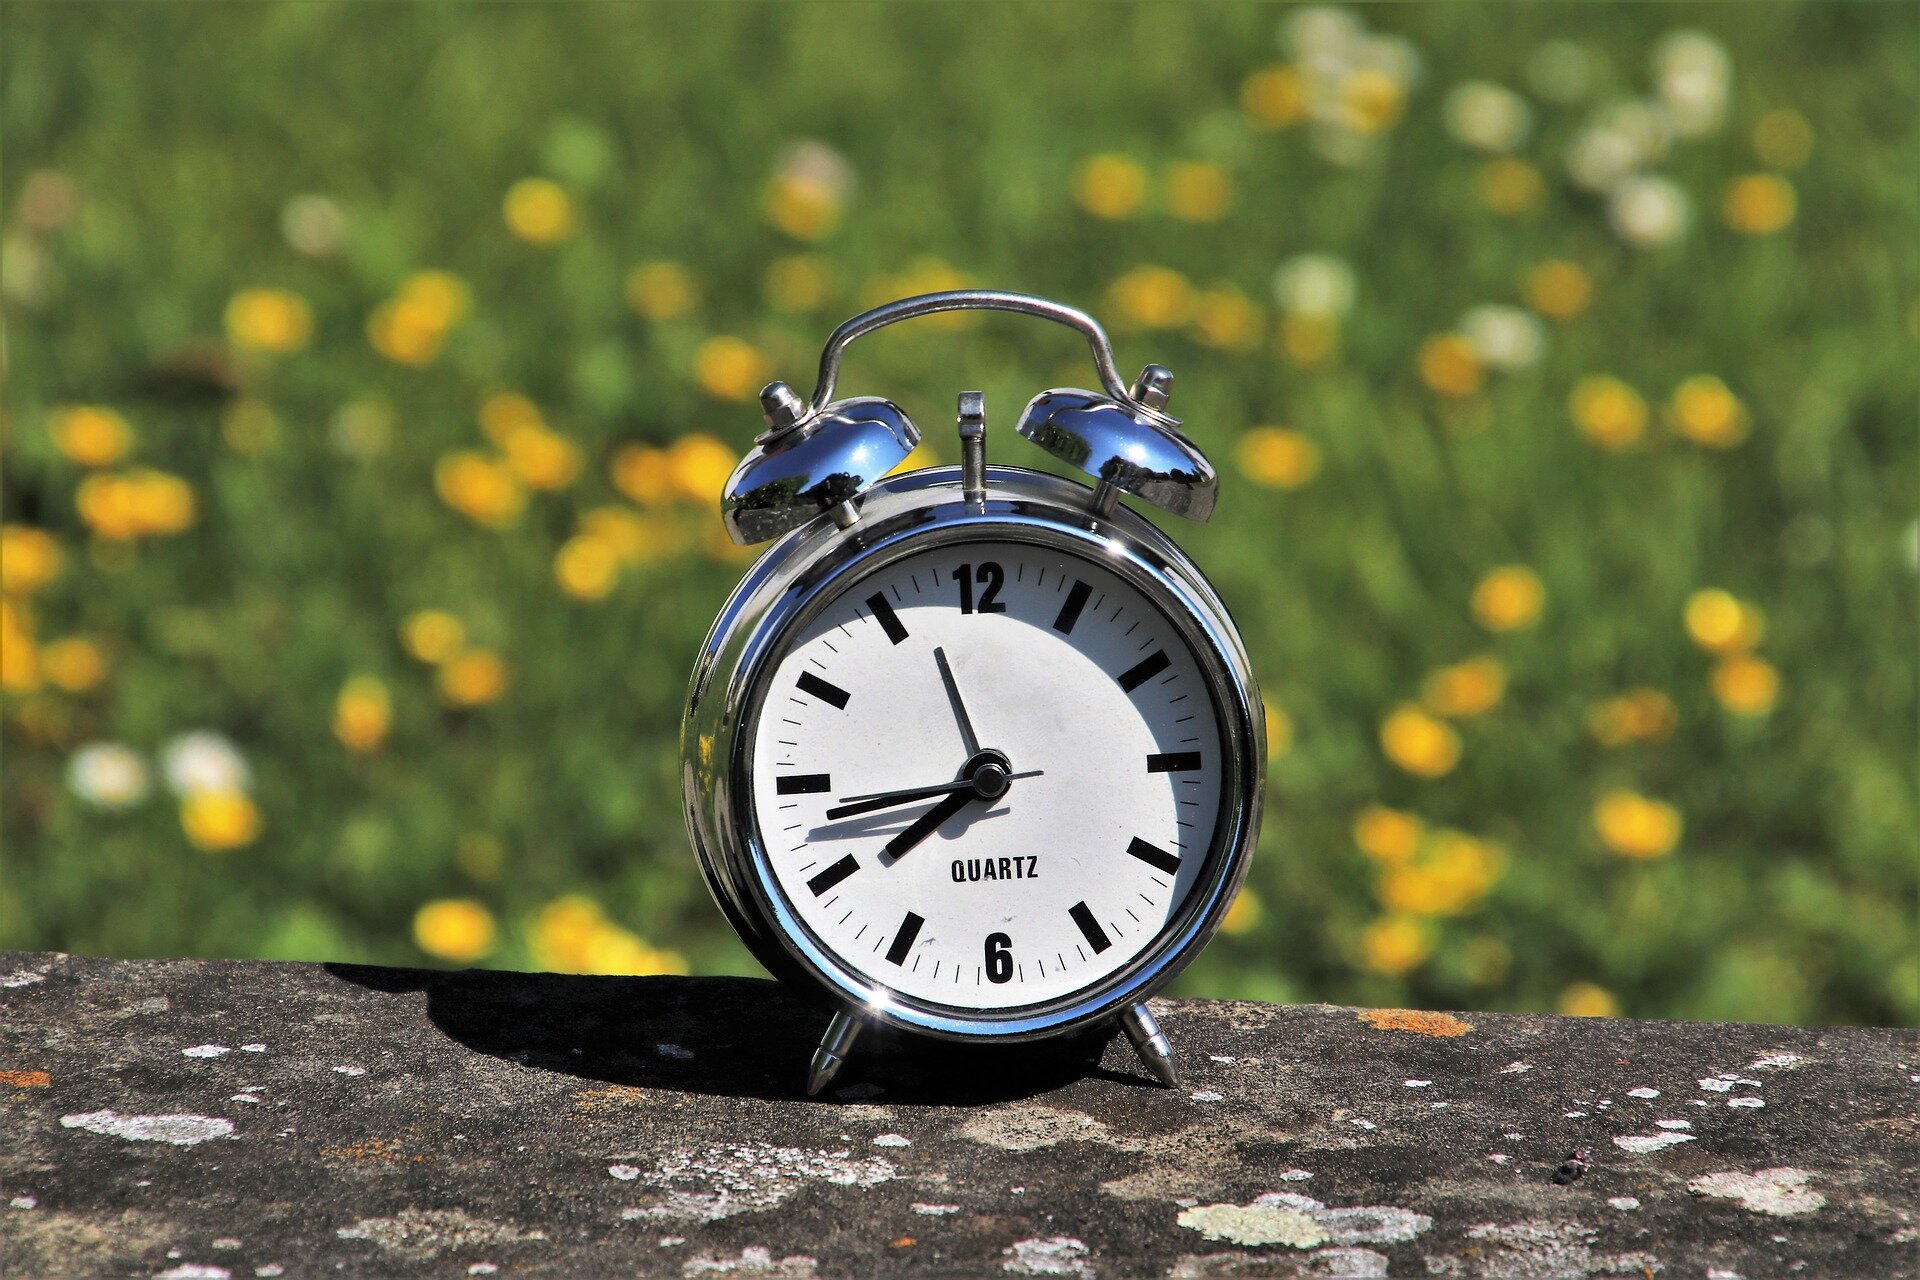 American Academy of Sleep Medicine calls for elimination of daylight saving time